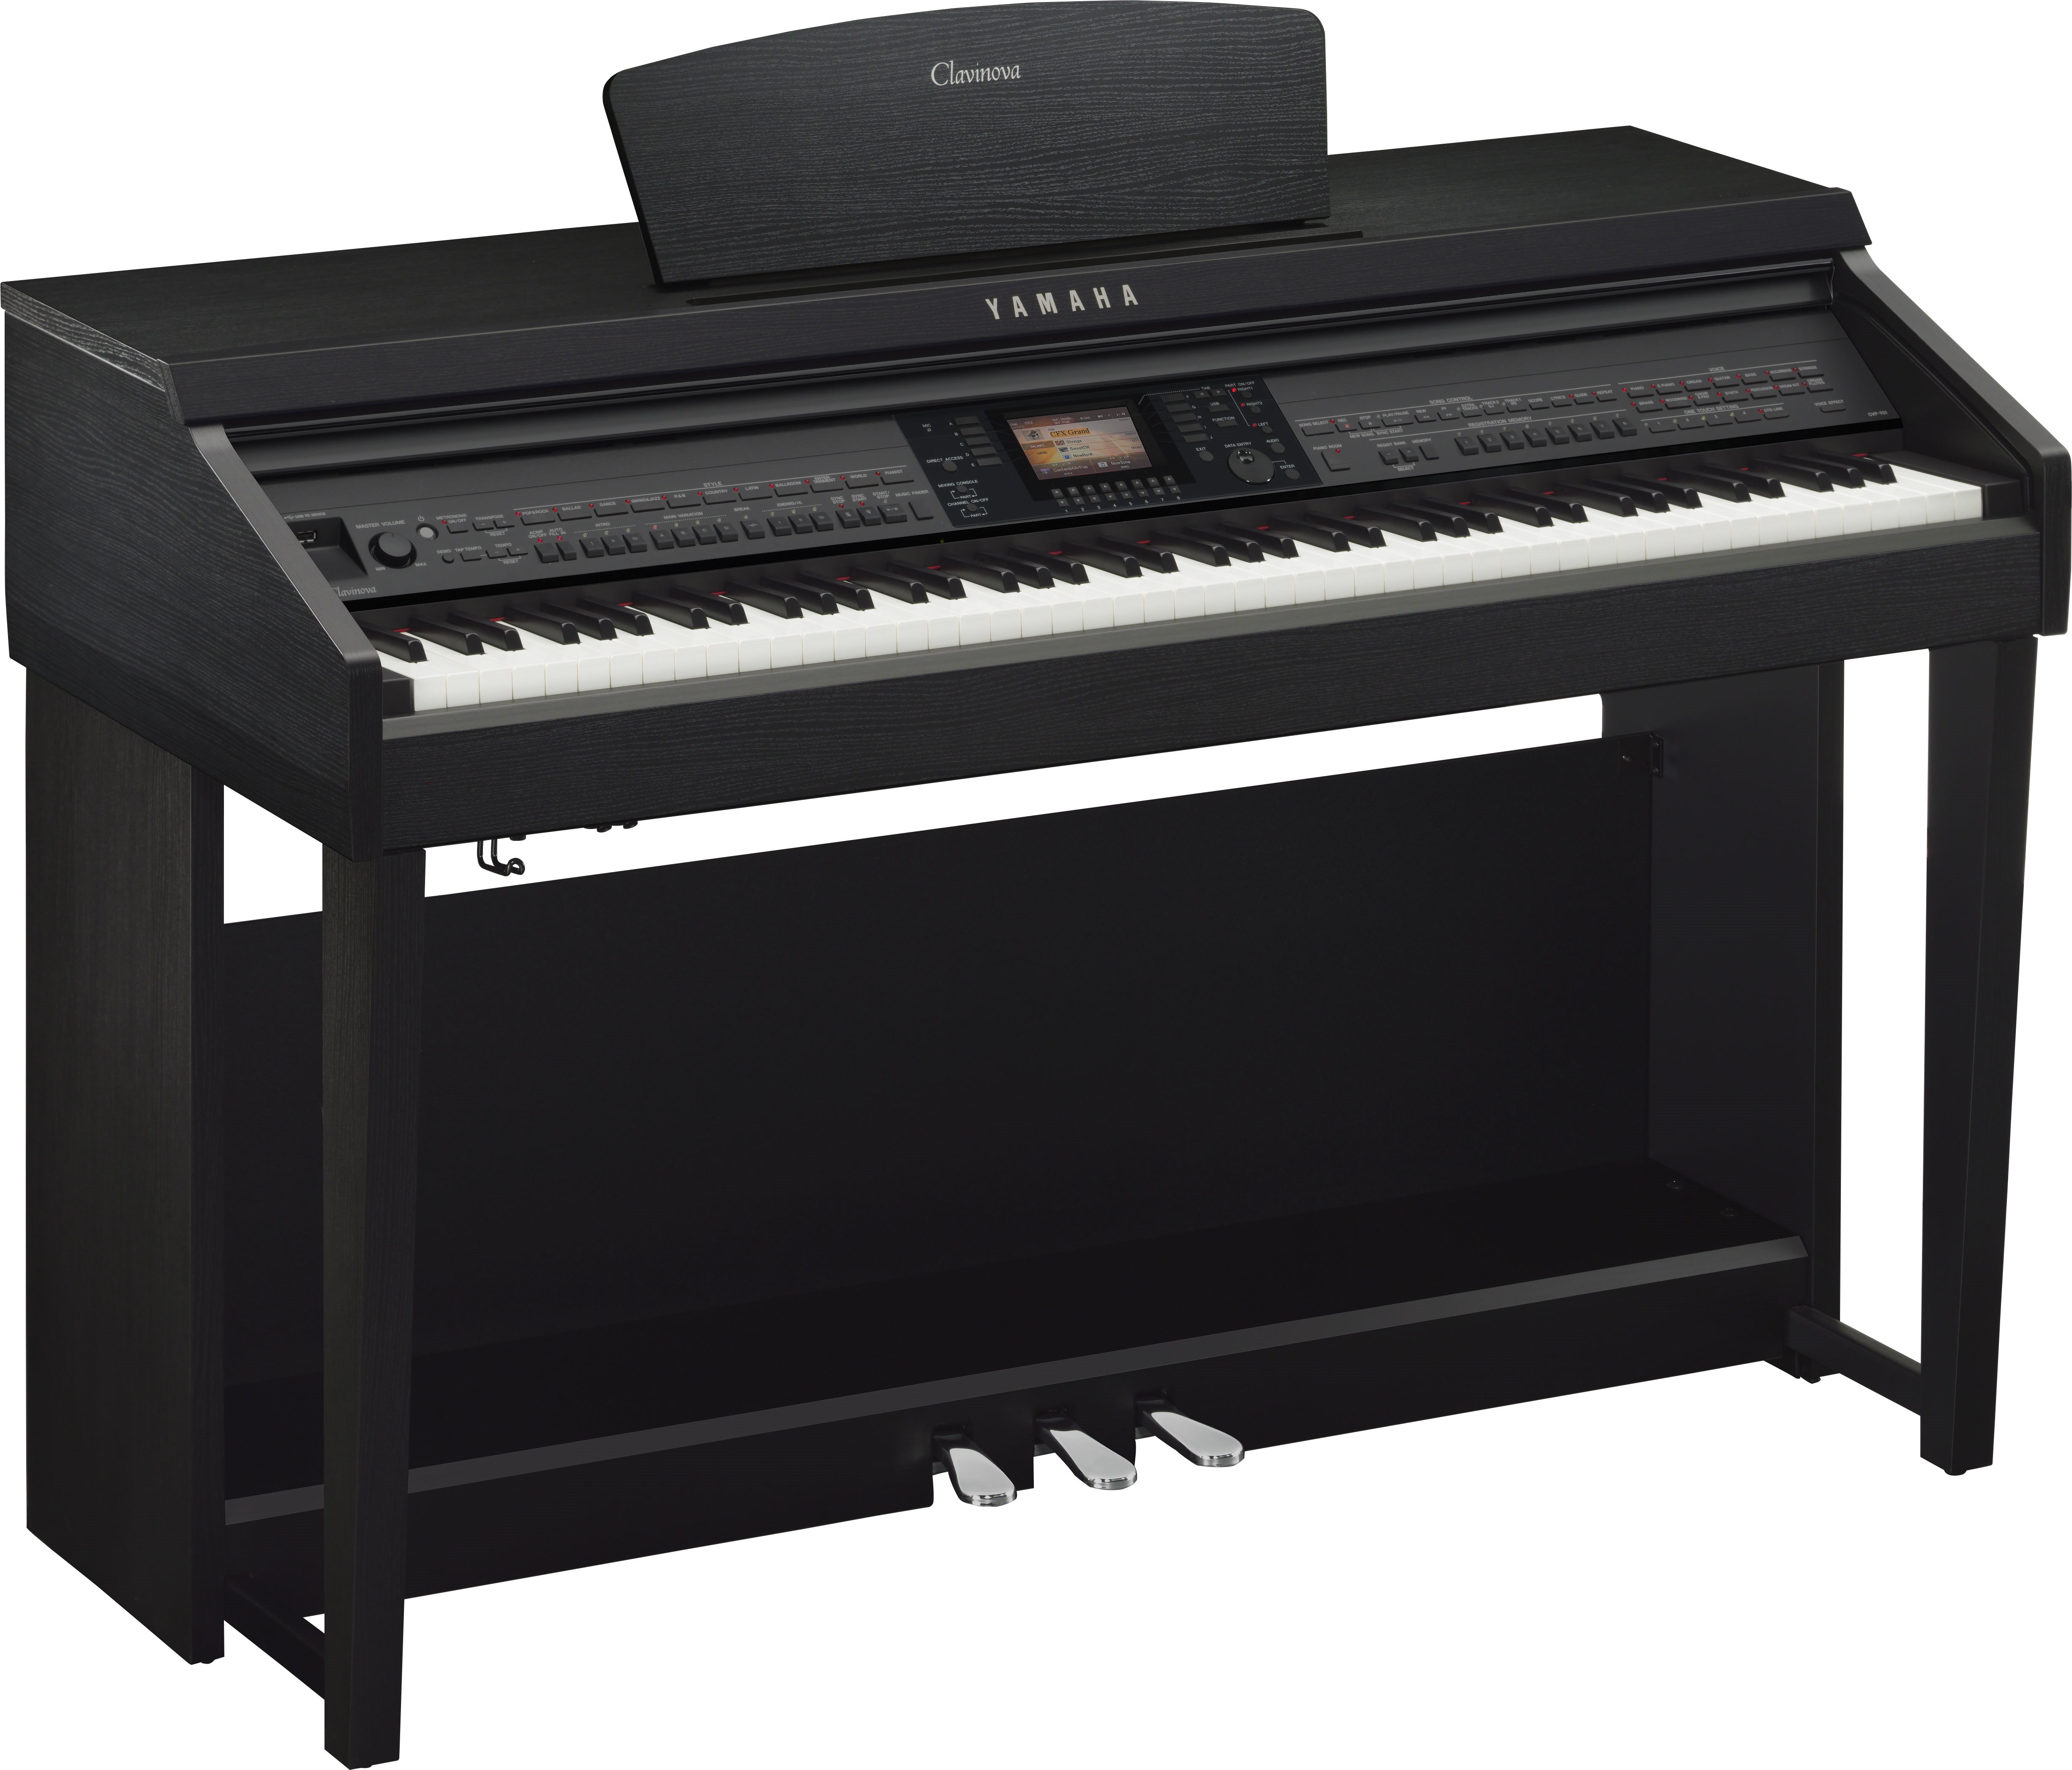 Đàn Piano Yamaha CVP-701B